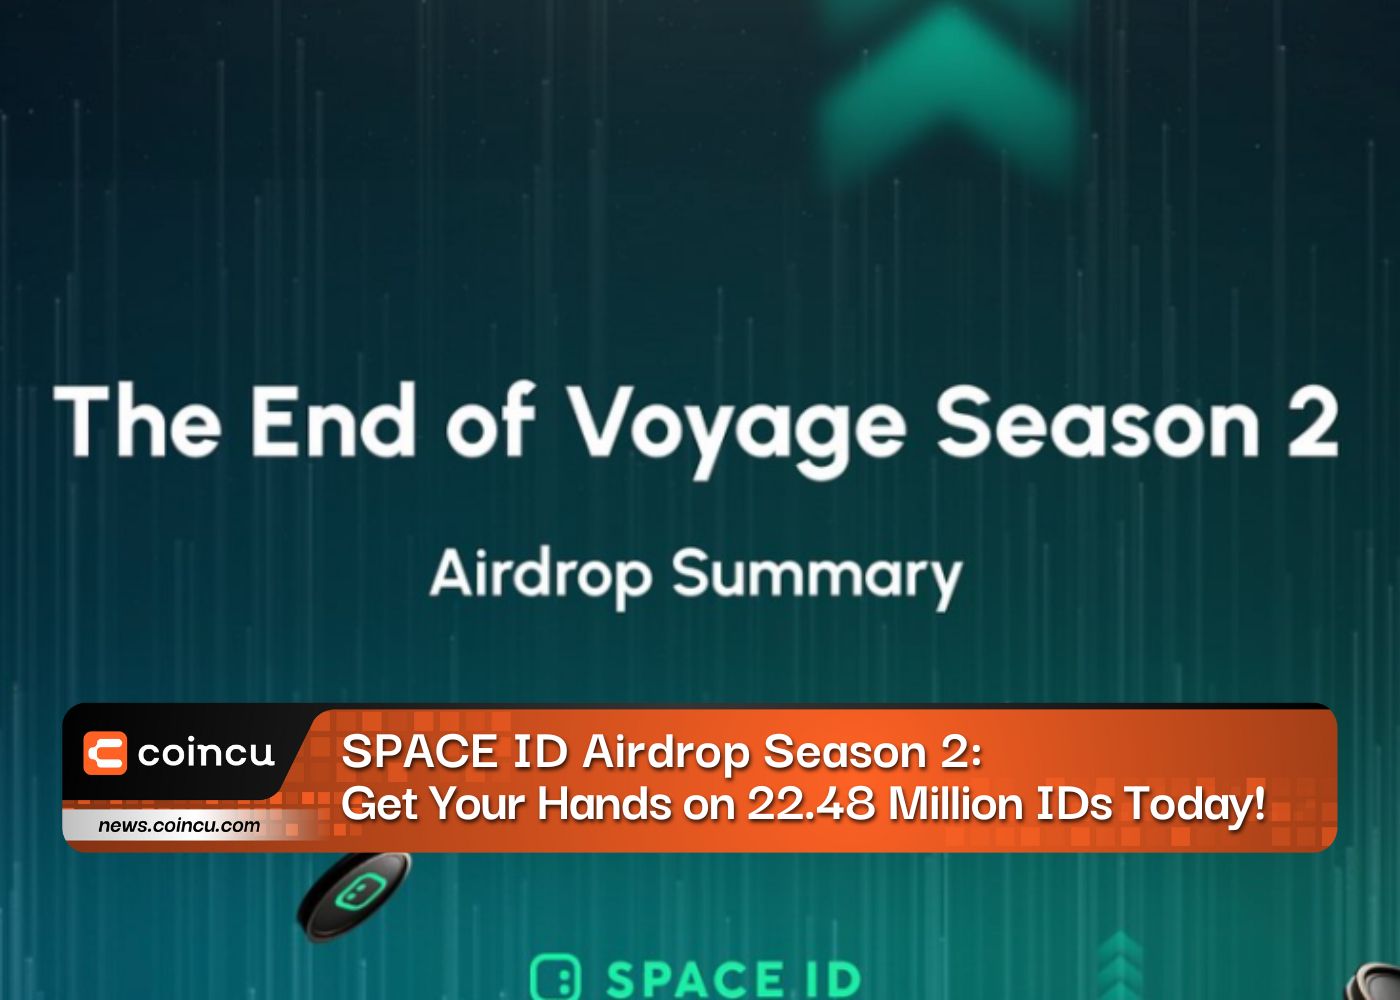 SPACE ID Airdrop Season 2